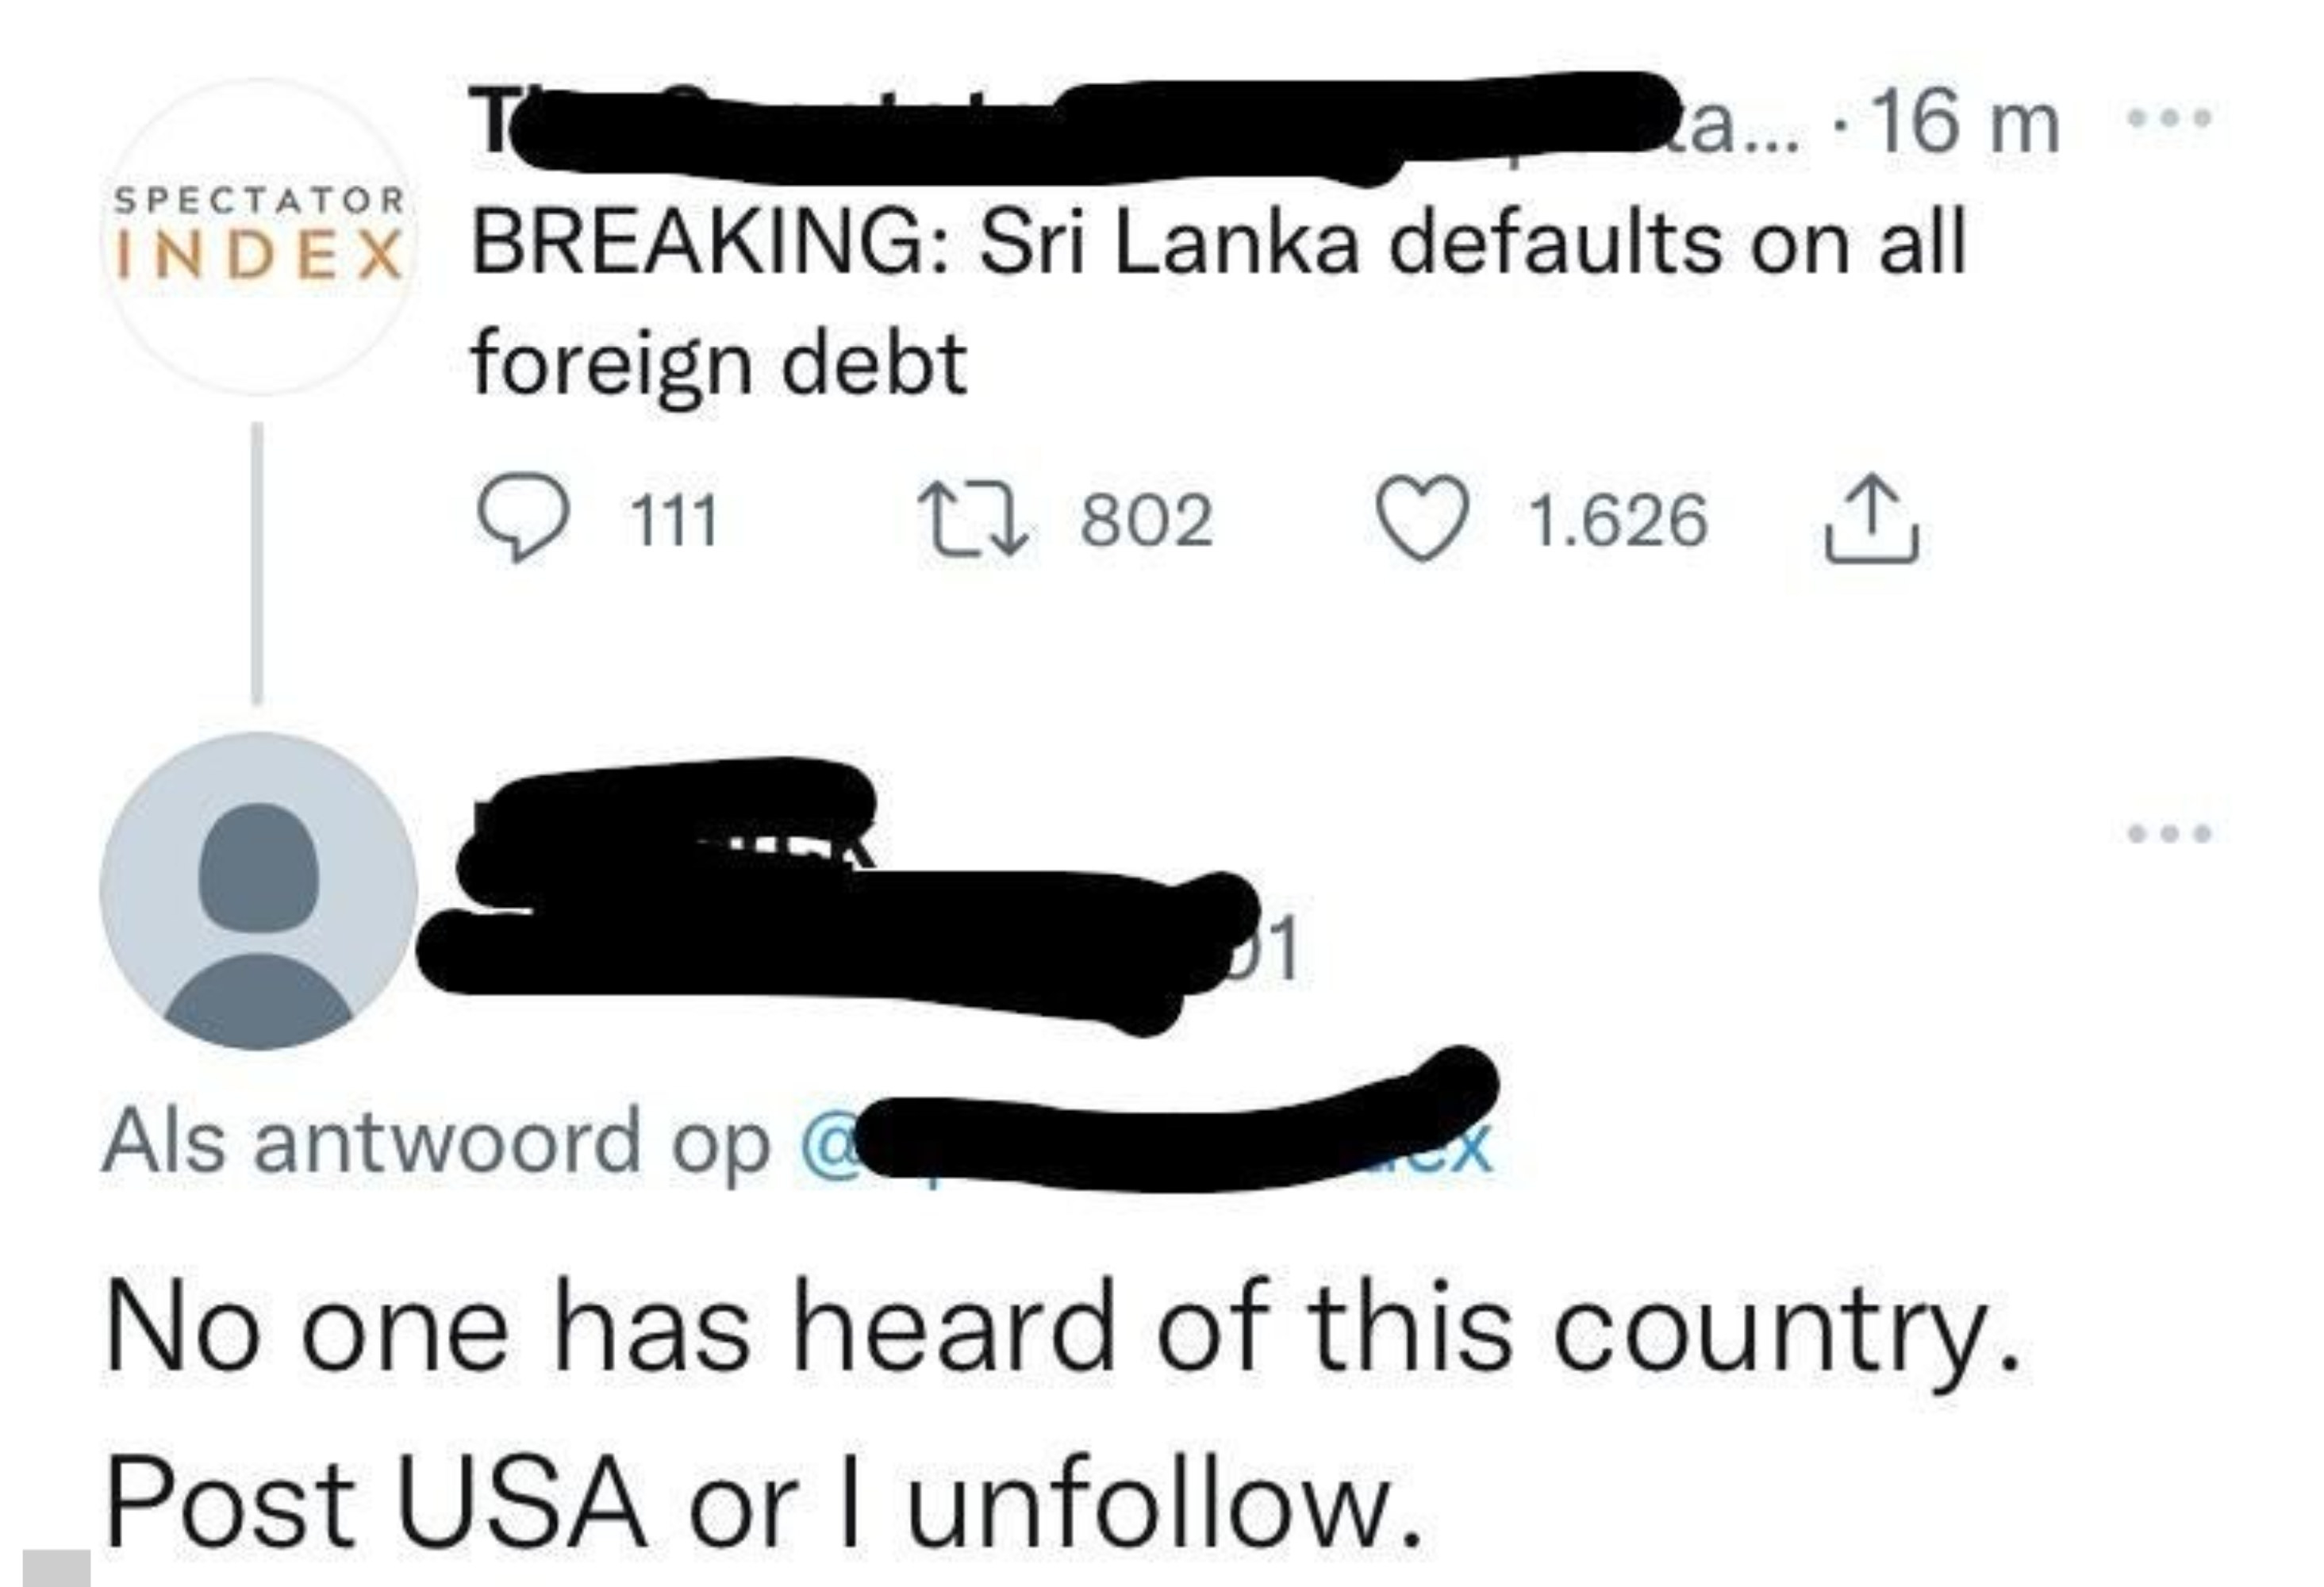 American saying they have never heard of sri lanka